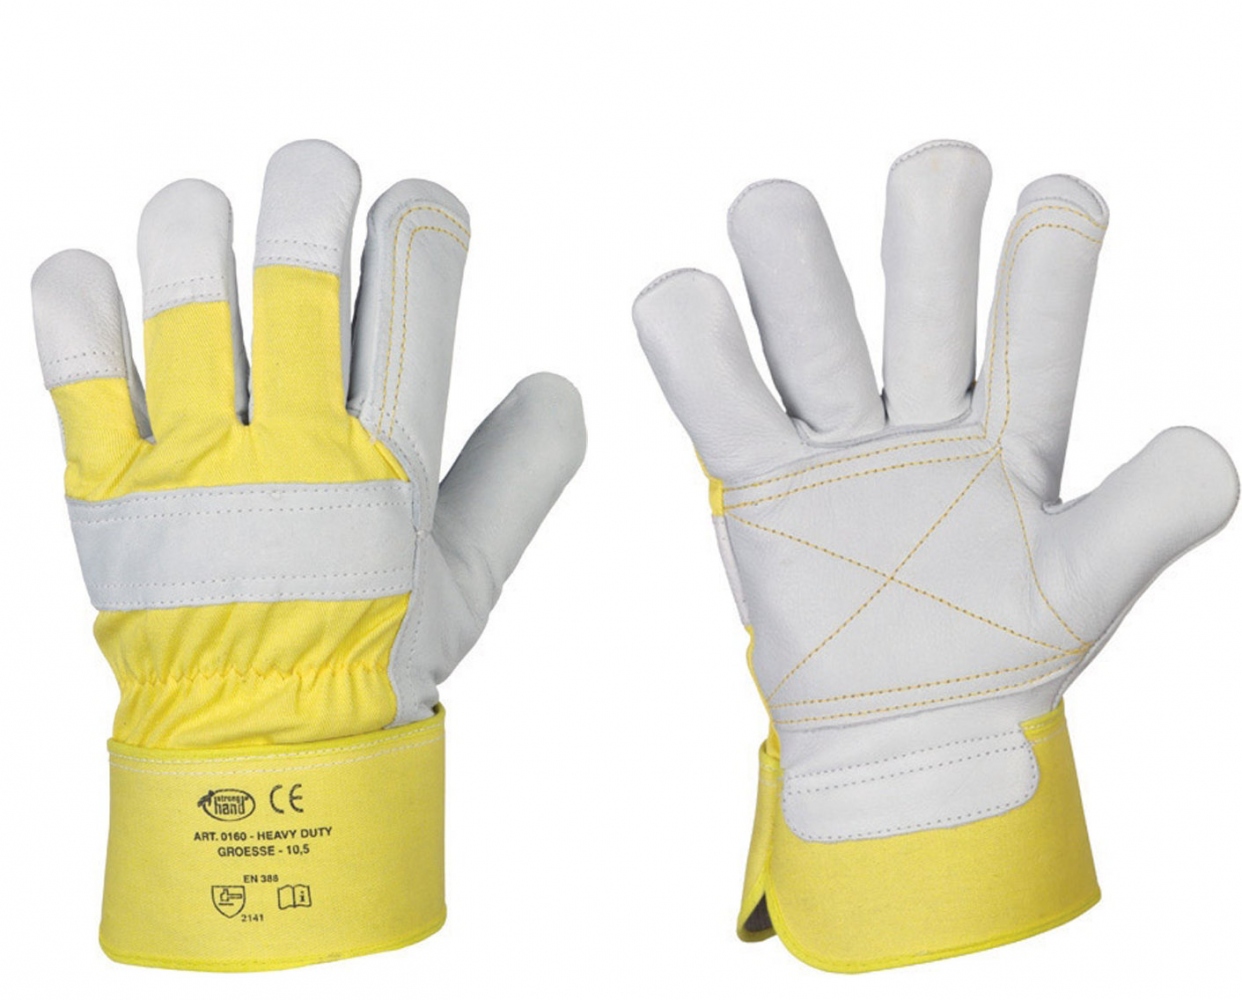 pics/Feldtmann 2016/Handschutz/google/stronghand-0168-heavy-duty-leather-safety-gloves2.jpg